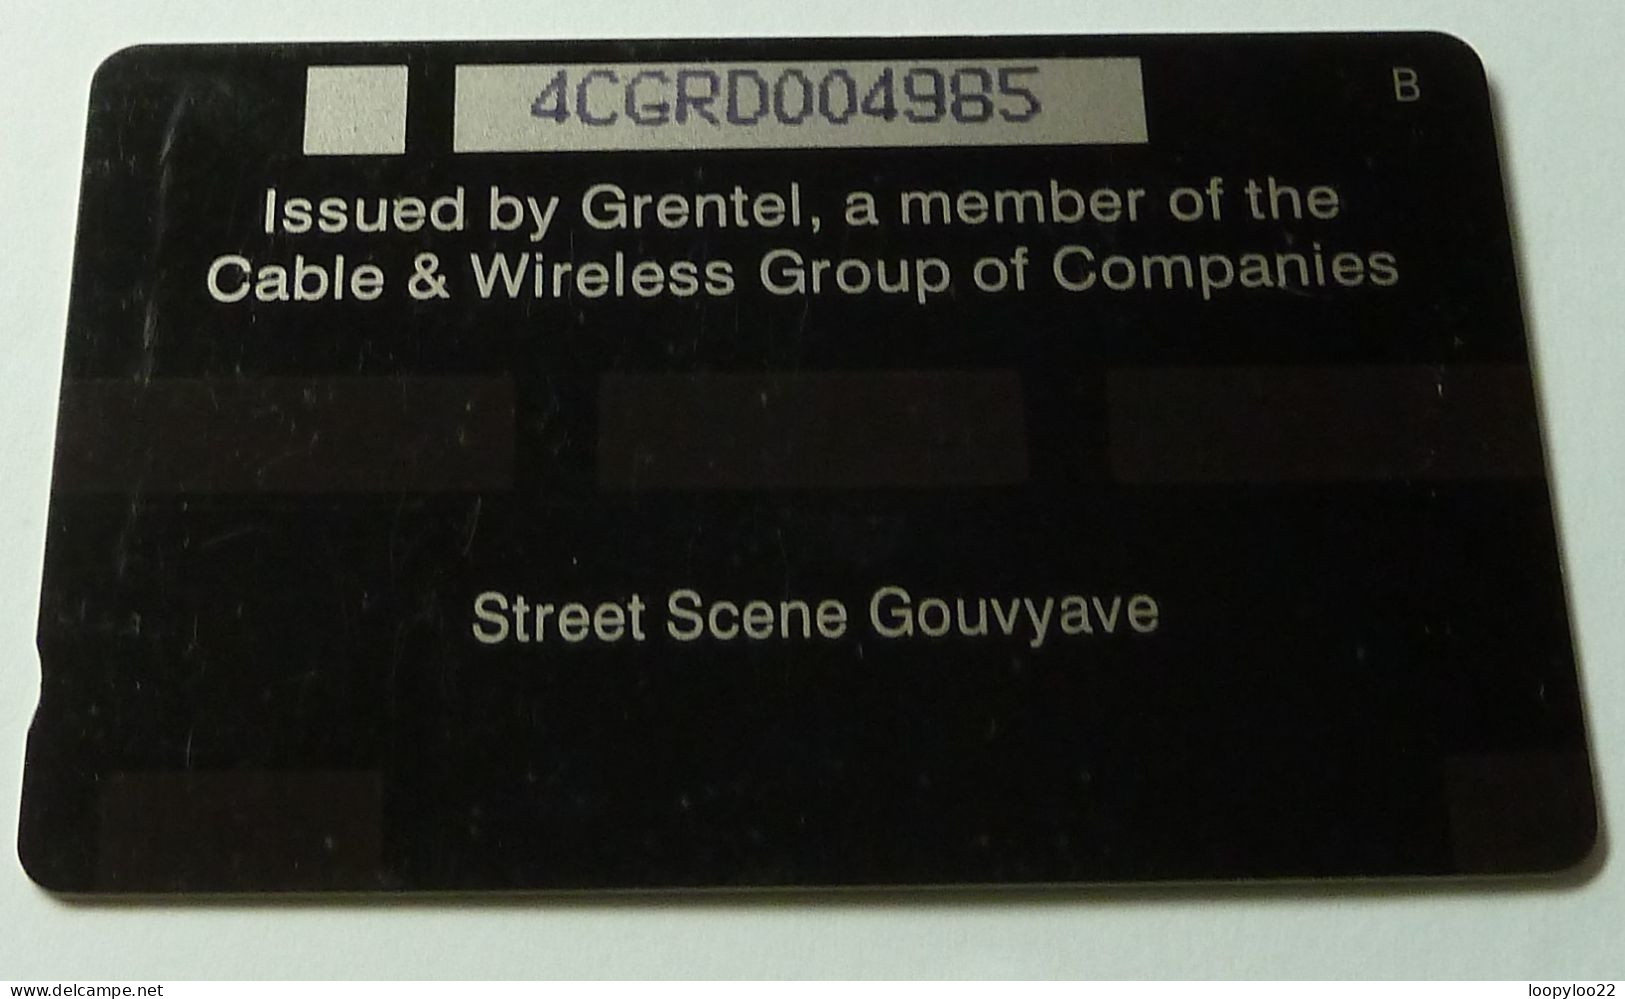 GRENADA - GRE-4D - GPT - 4CGRD - $40 - Street Scene Gouvyave - Mint - Grenade